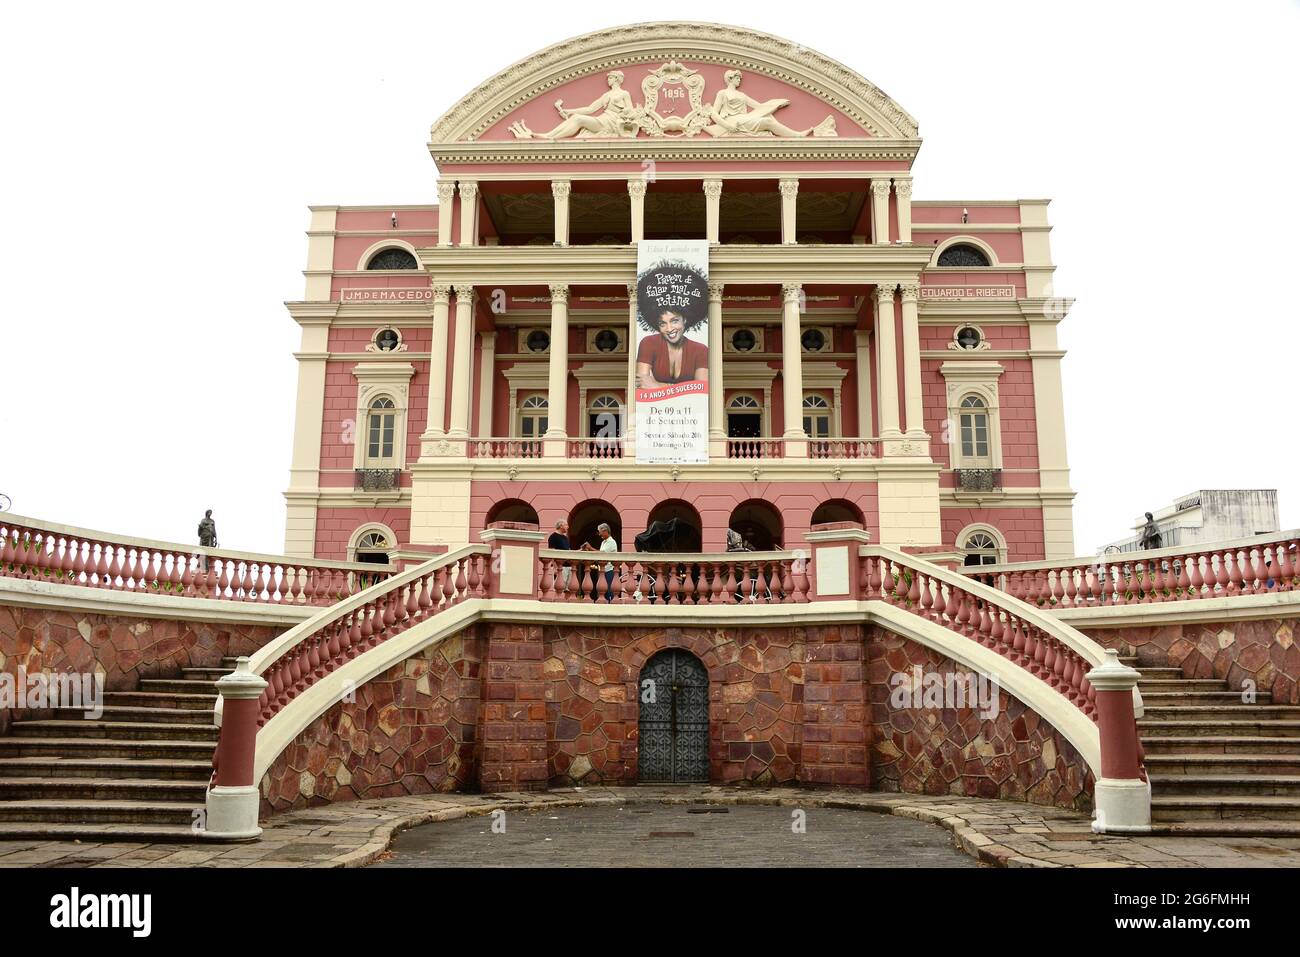 Manaus, Teatro Amazonas (Amazon Theater). Brazil. Stock Photo